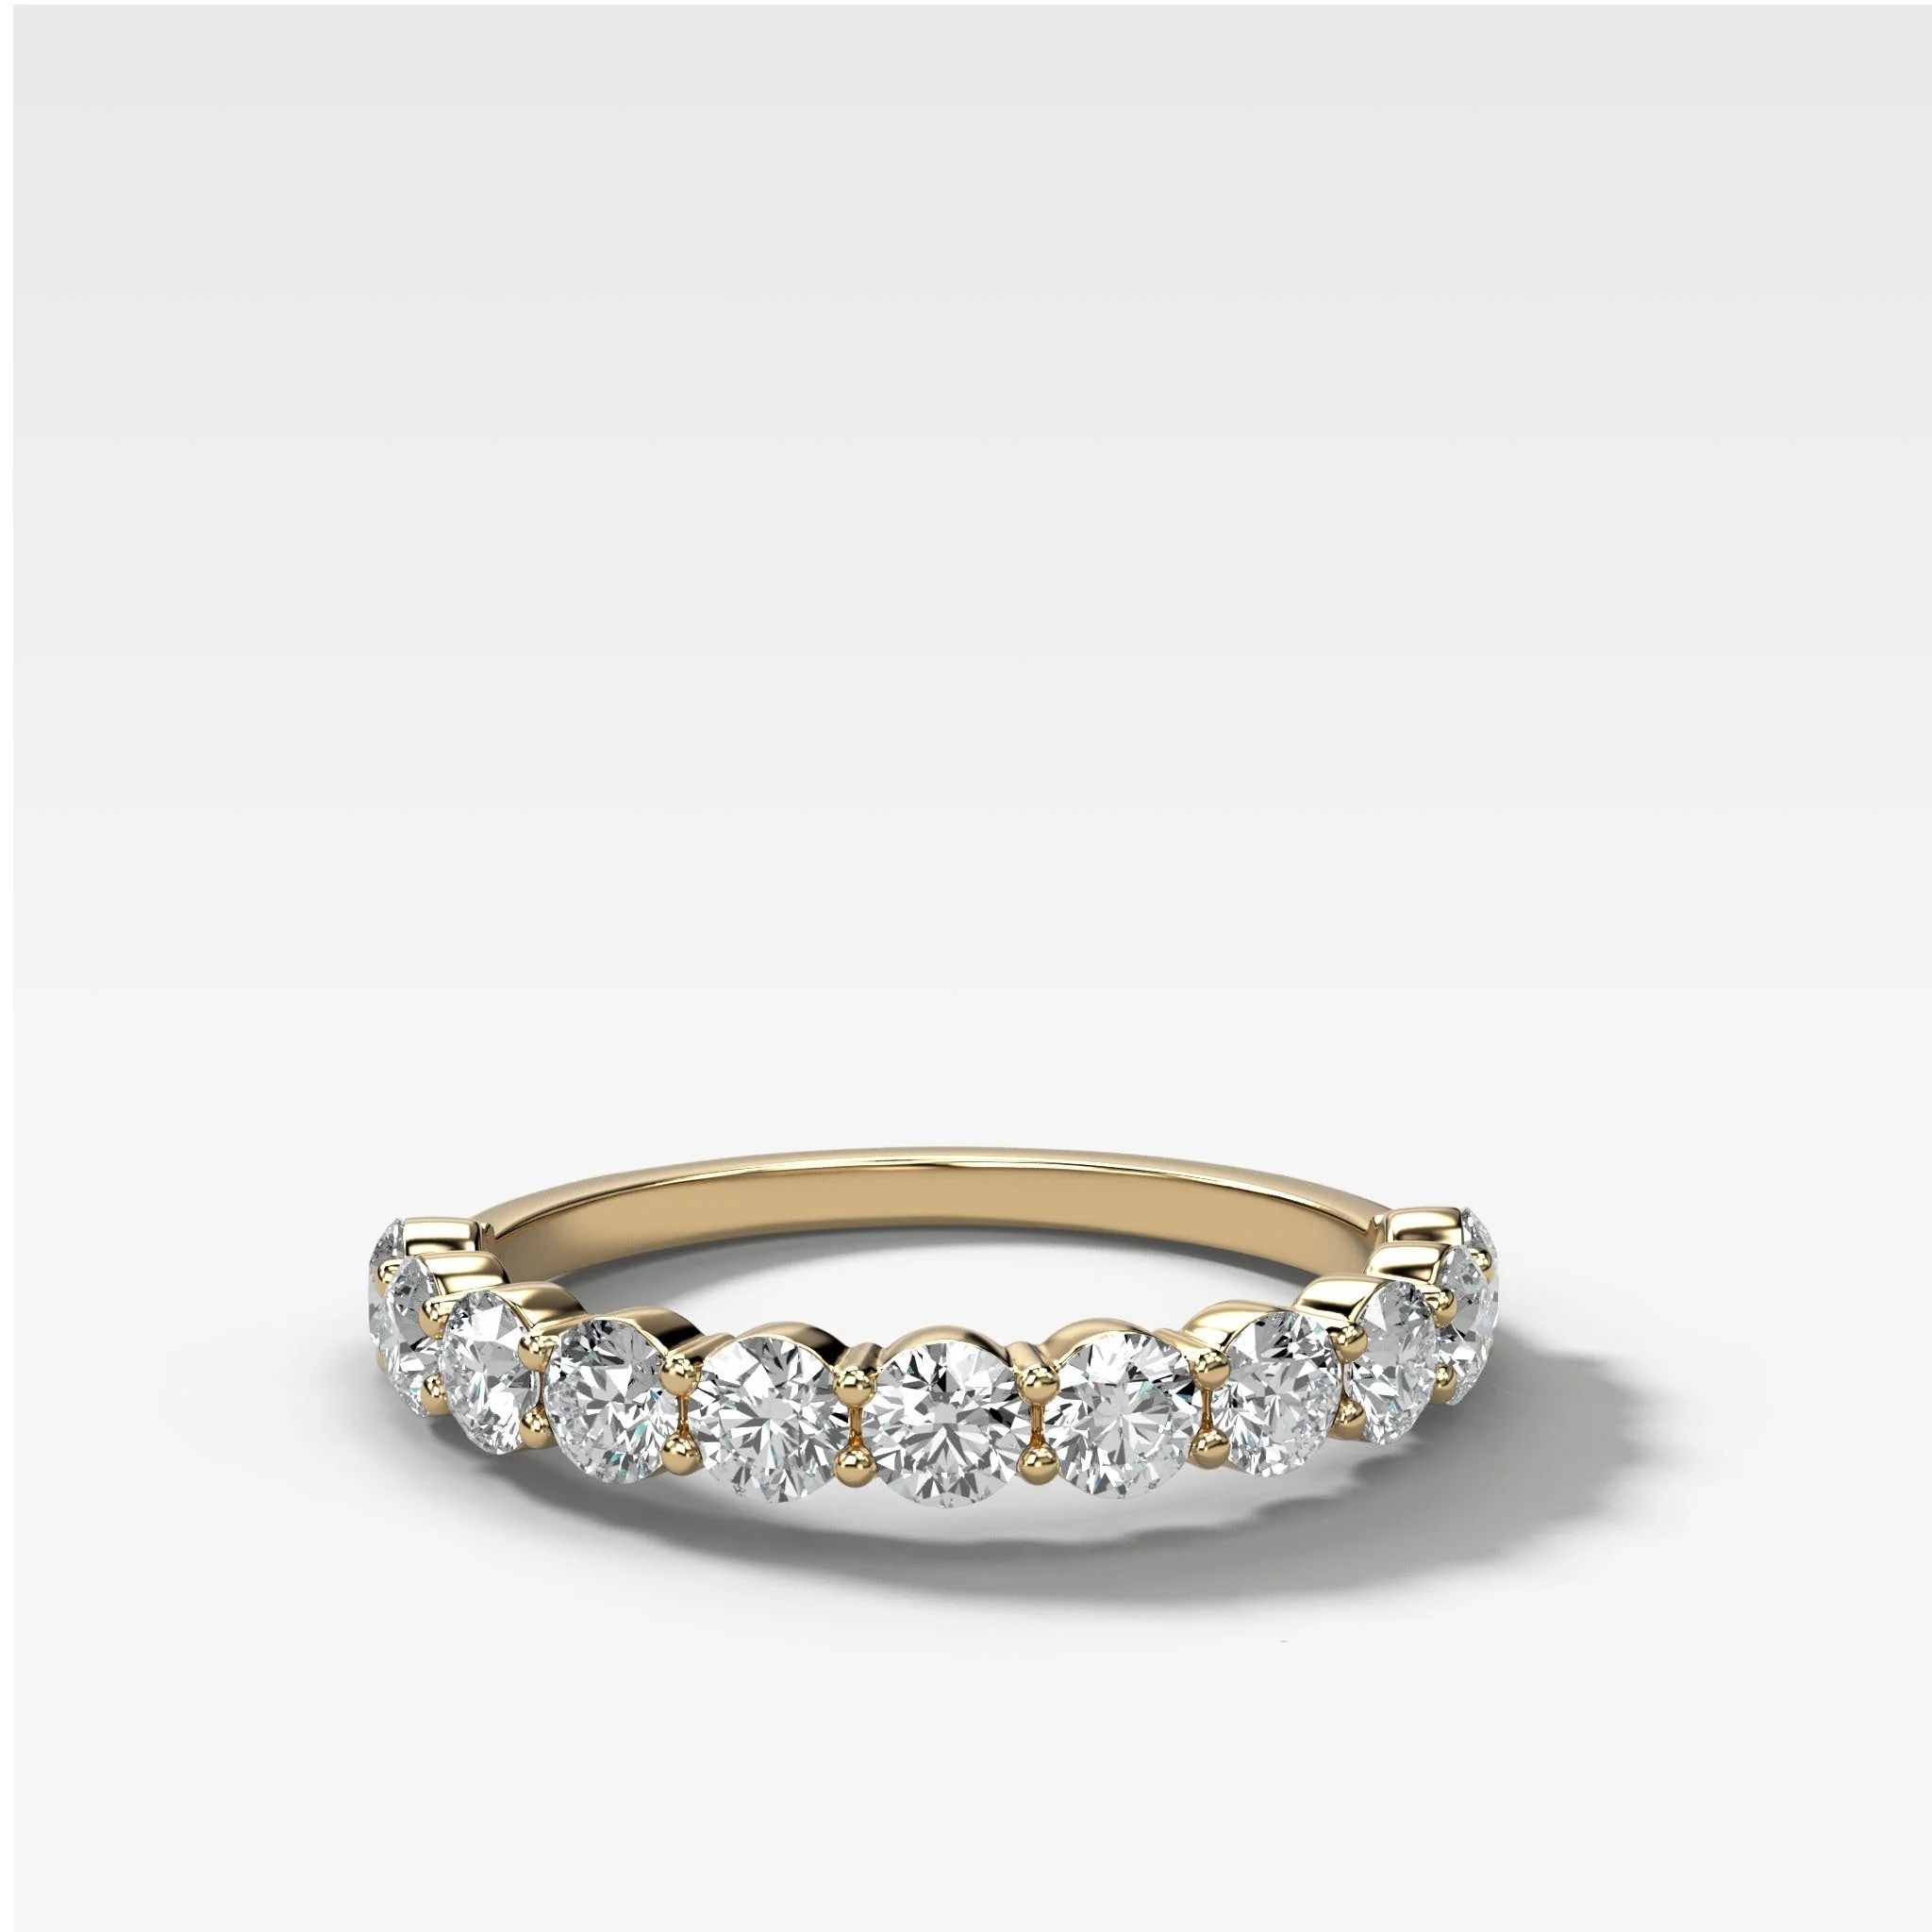 Shared Prong Wedding Band With Round Diamonds | Good Stone